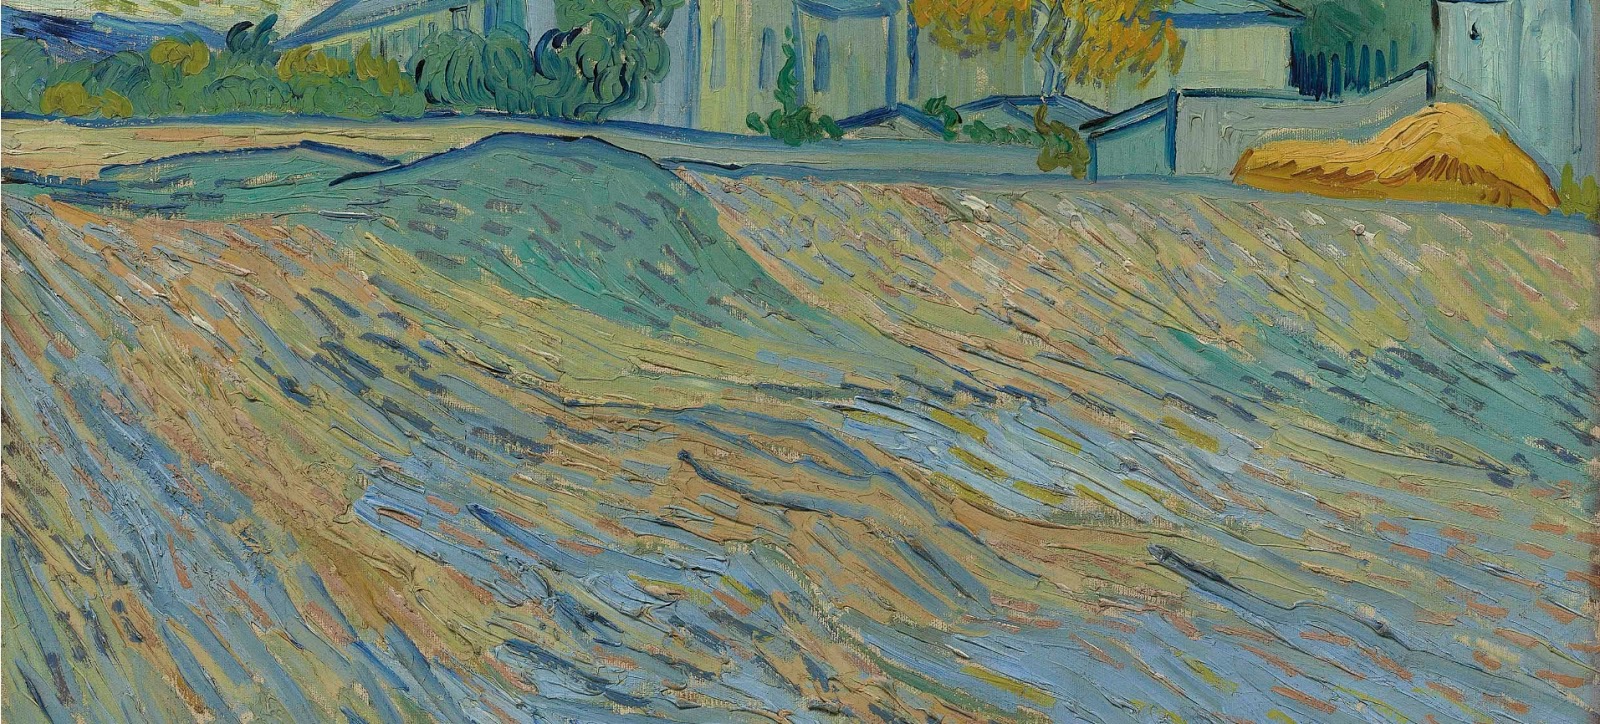 Vincent+Van+Gogh-1853-1890 (501).jpg